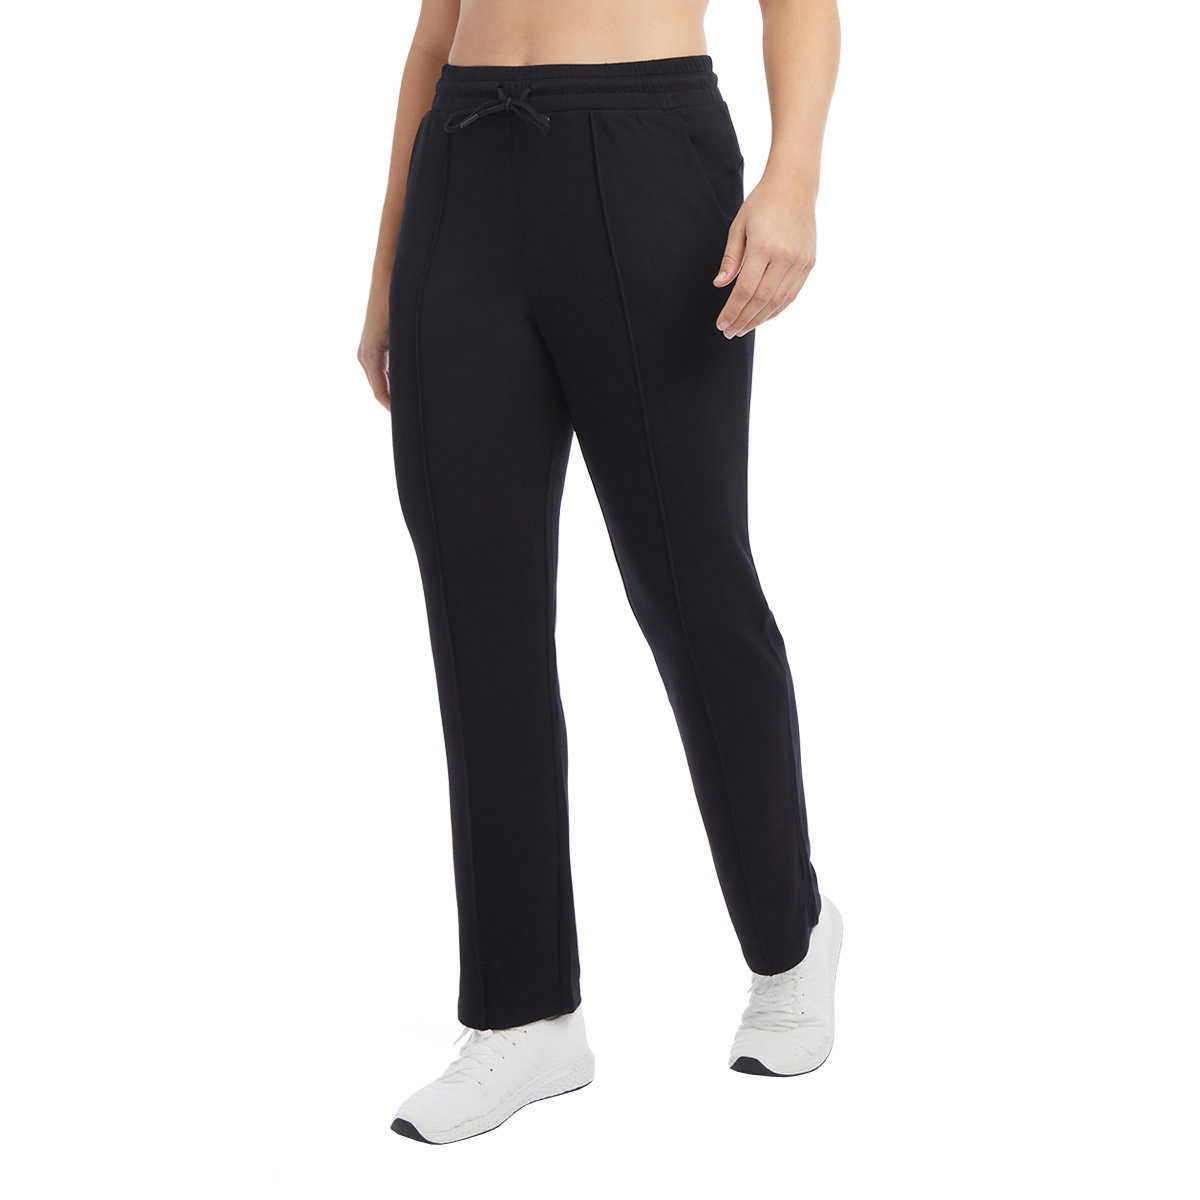 Plus Sized Yoga Bossy Pants | Butibag – butibag